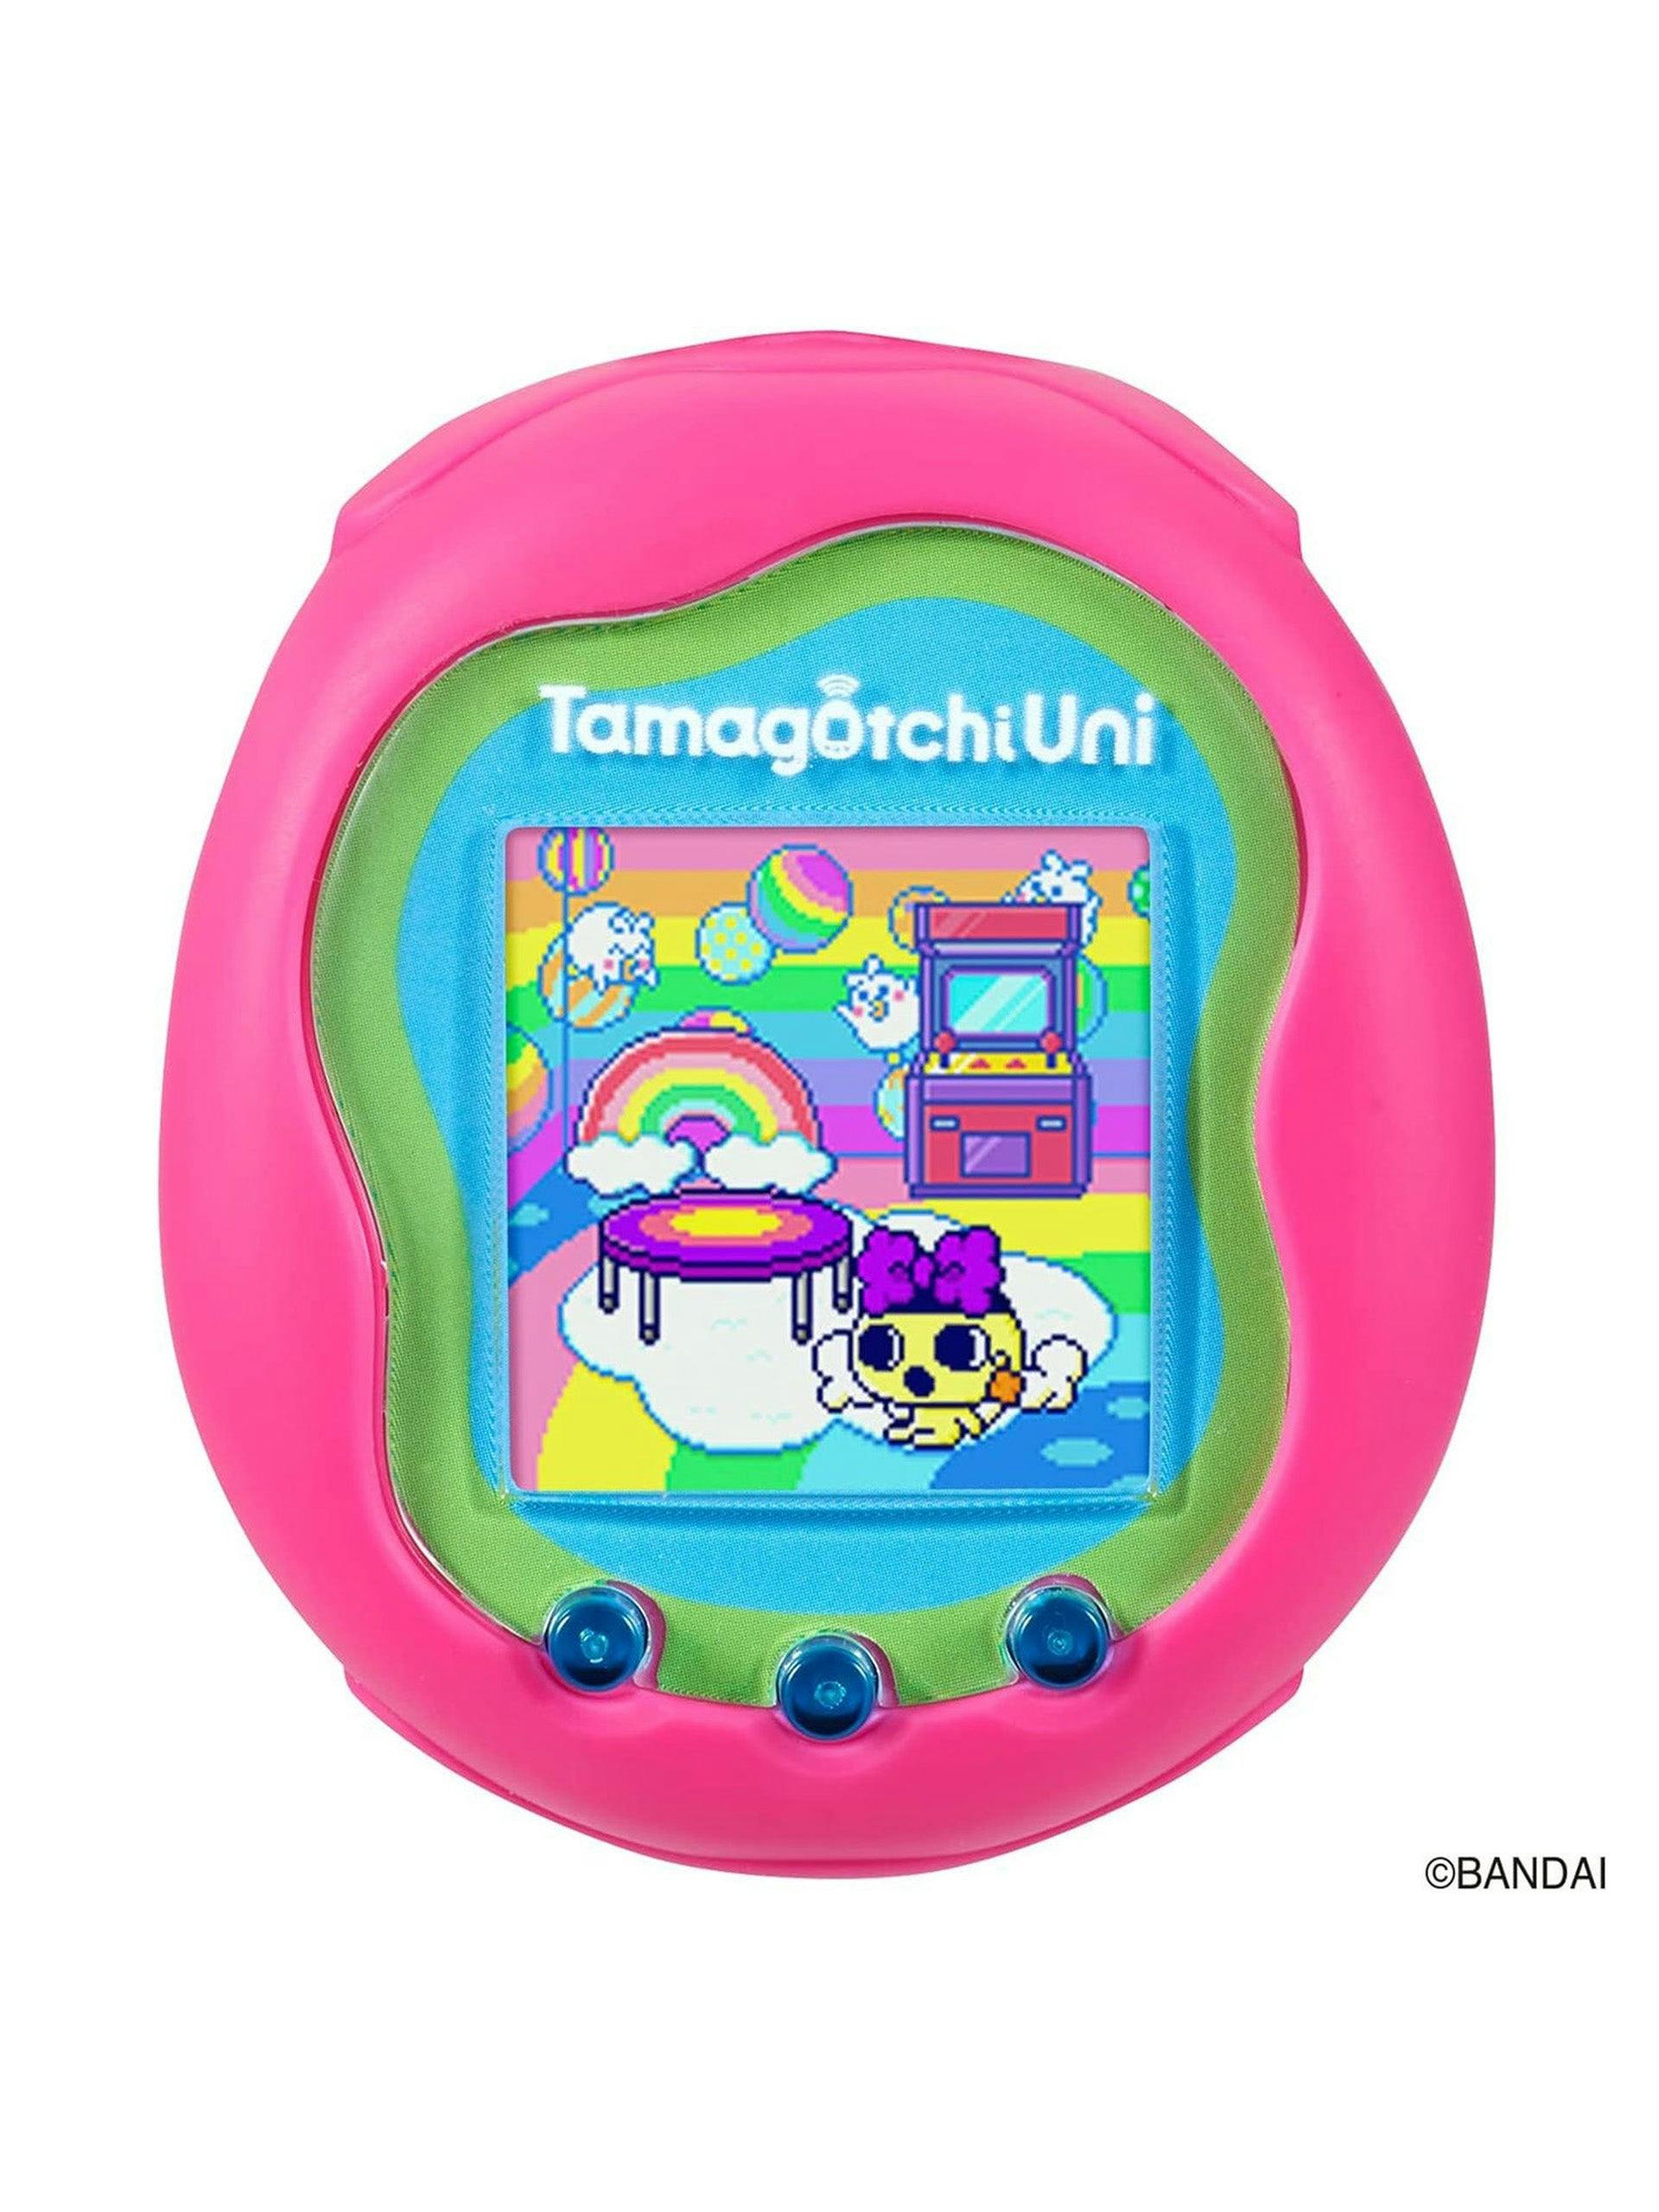 Tamagotchi Uni virtual pet toy